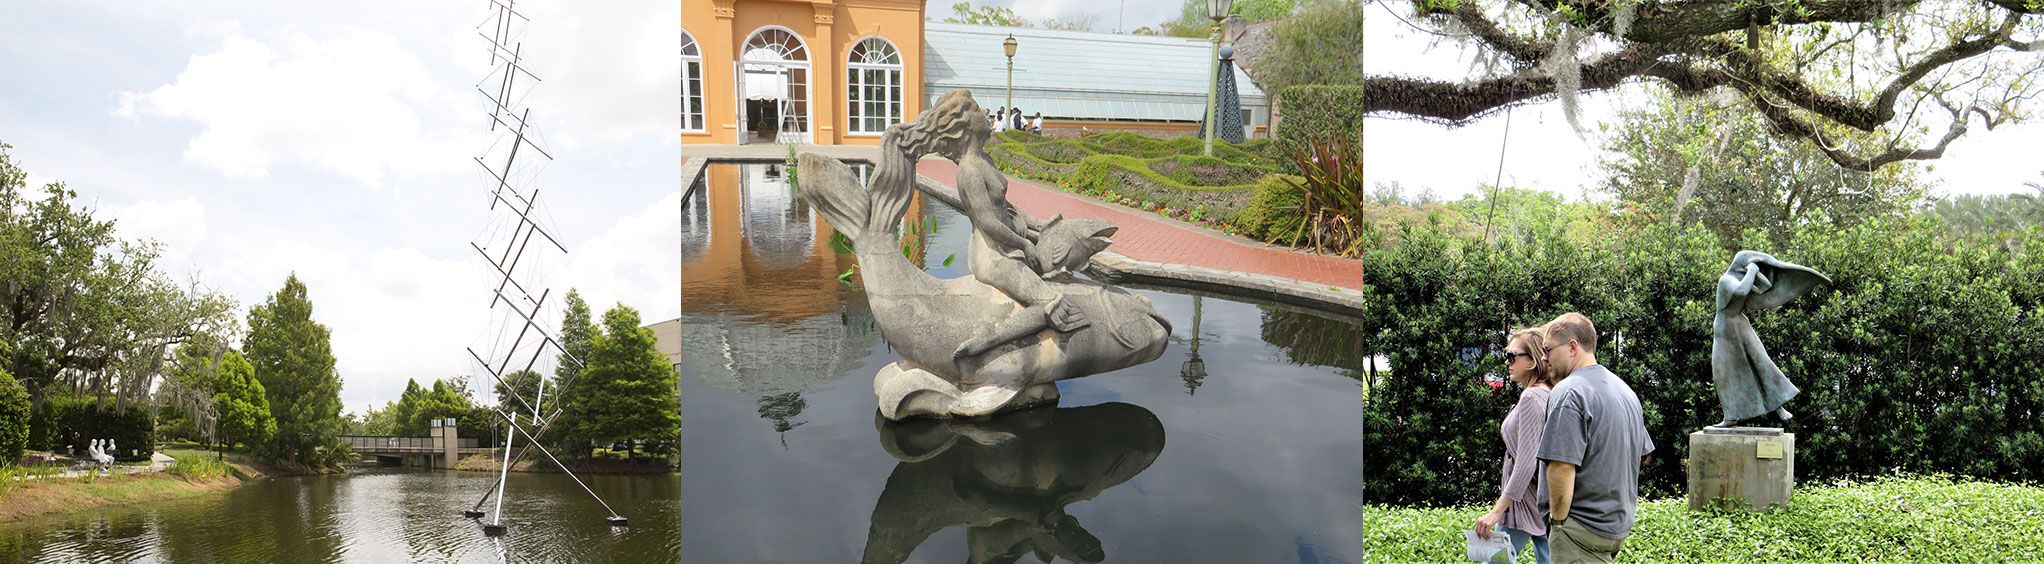 Crevasse 22 | River House and Sculpture Garden near New Orleans